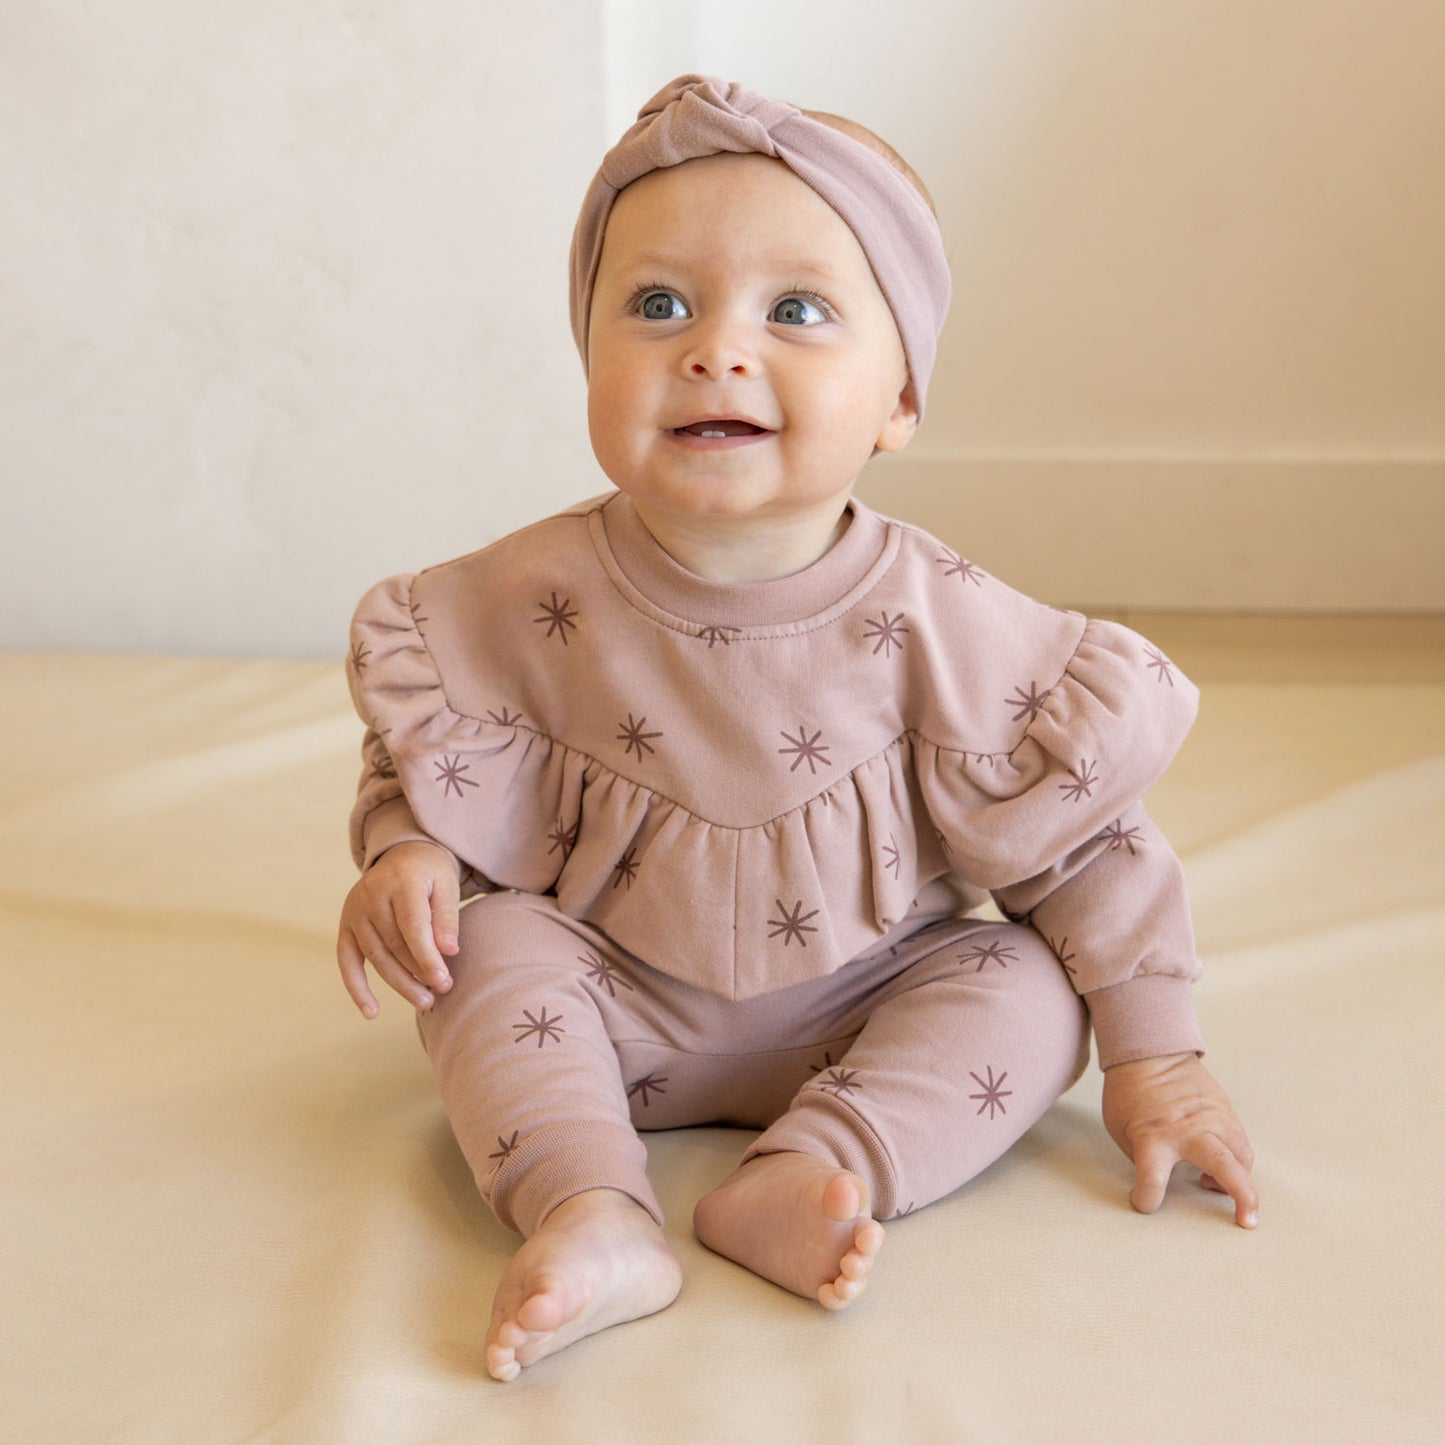 Baby wearing Quincy Mae Fleece Sweatpant - Snow Stars - Mauve